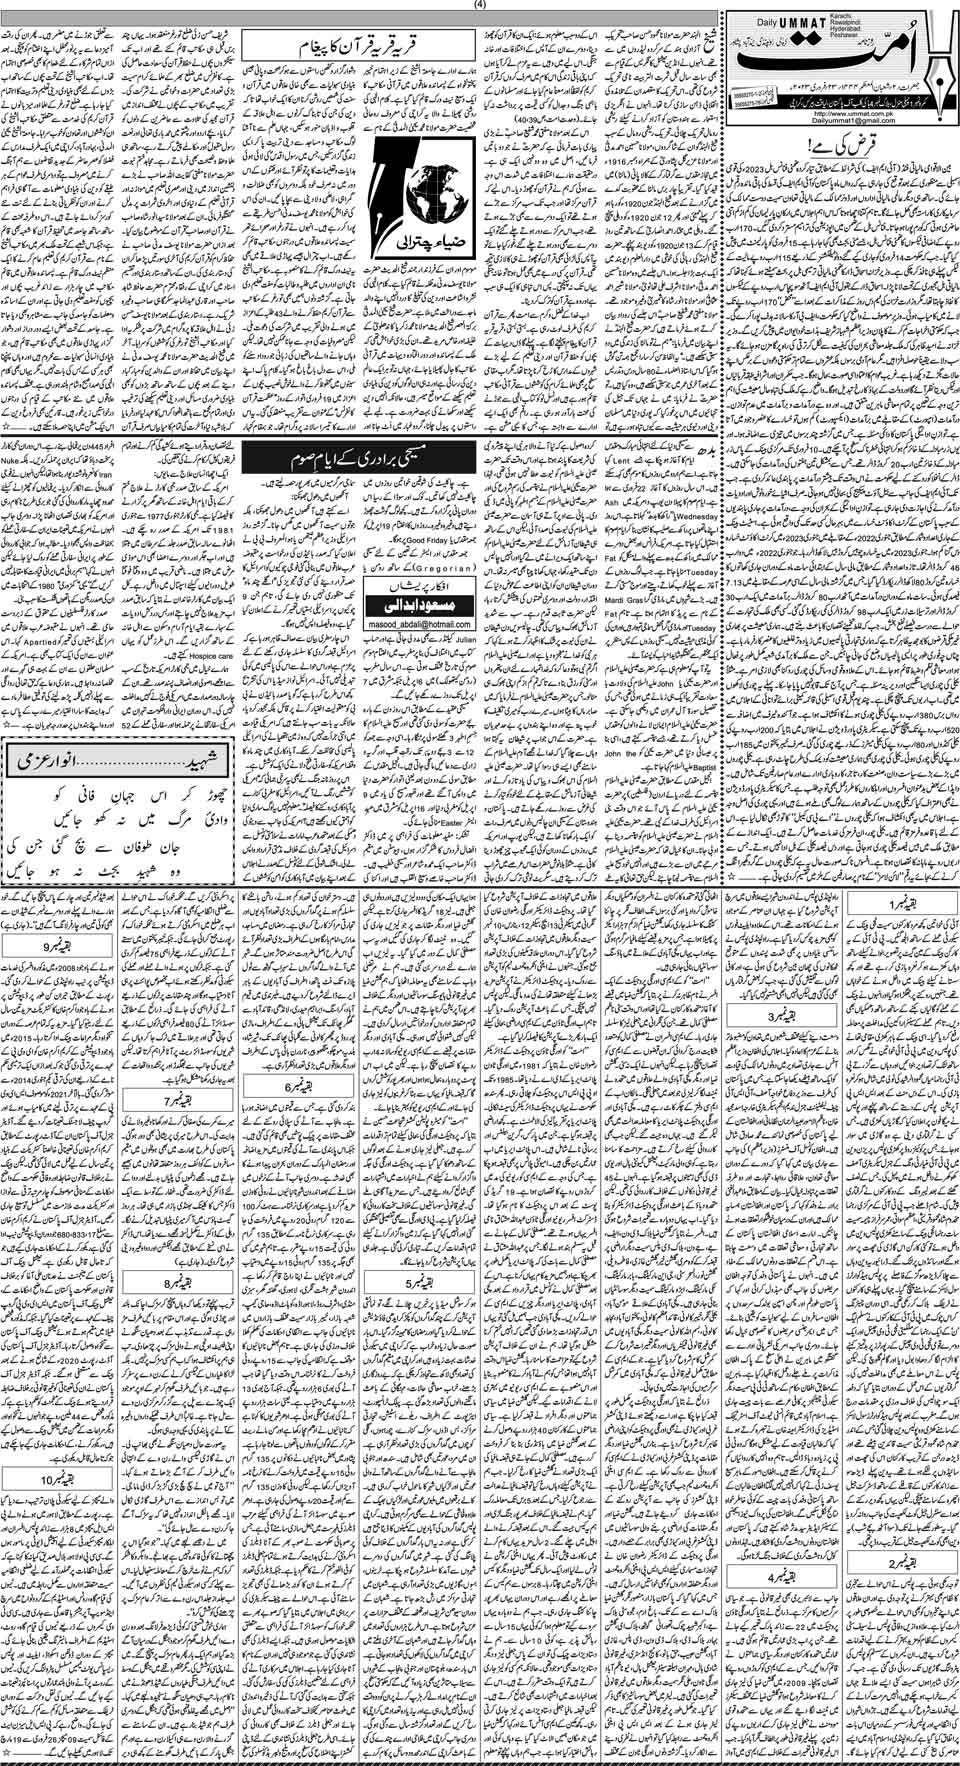 Ummat Publications | Daily Ummat Karachi provides latest news in urdu ...